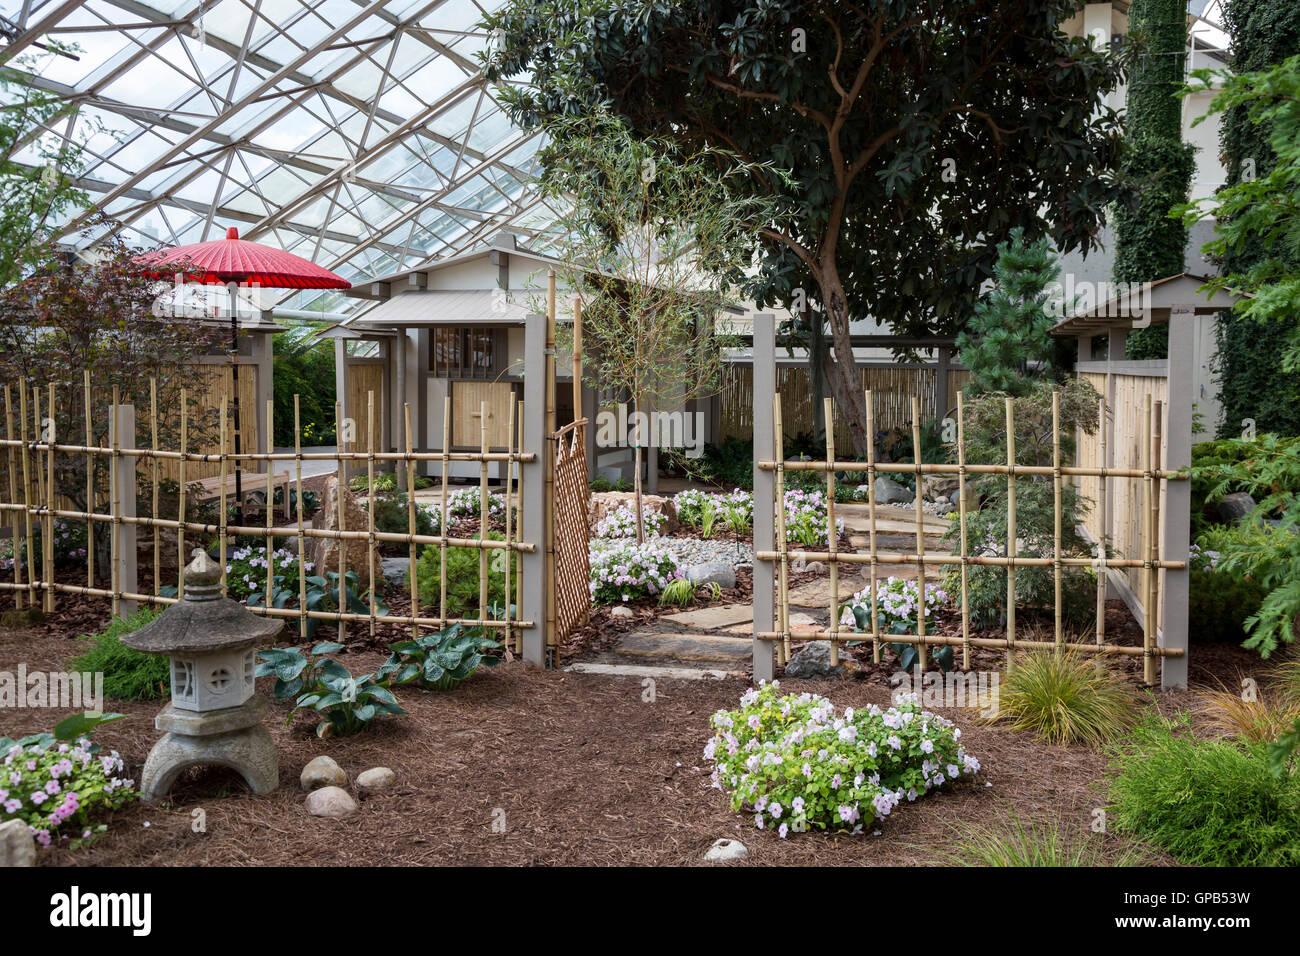 Fort Wayne, Indiana - un giardino giapponese del tè presentano al Foellinger-Freimann Conservatorio Botanico. Foto Stock